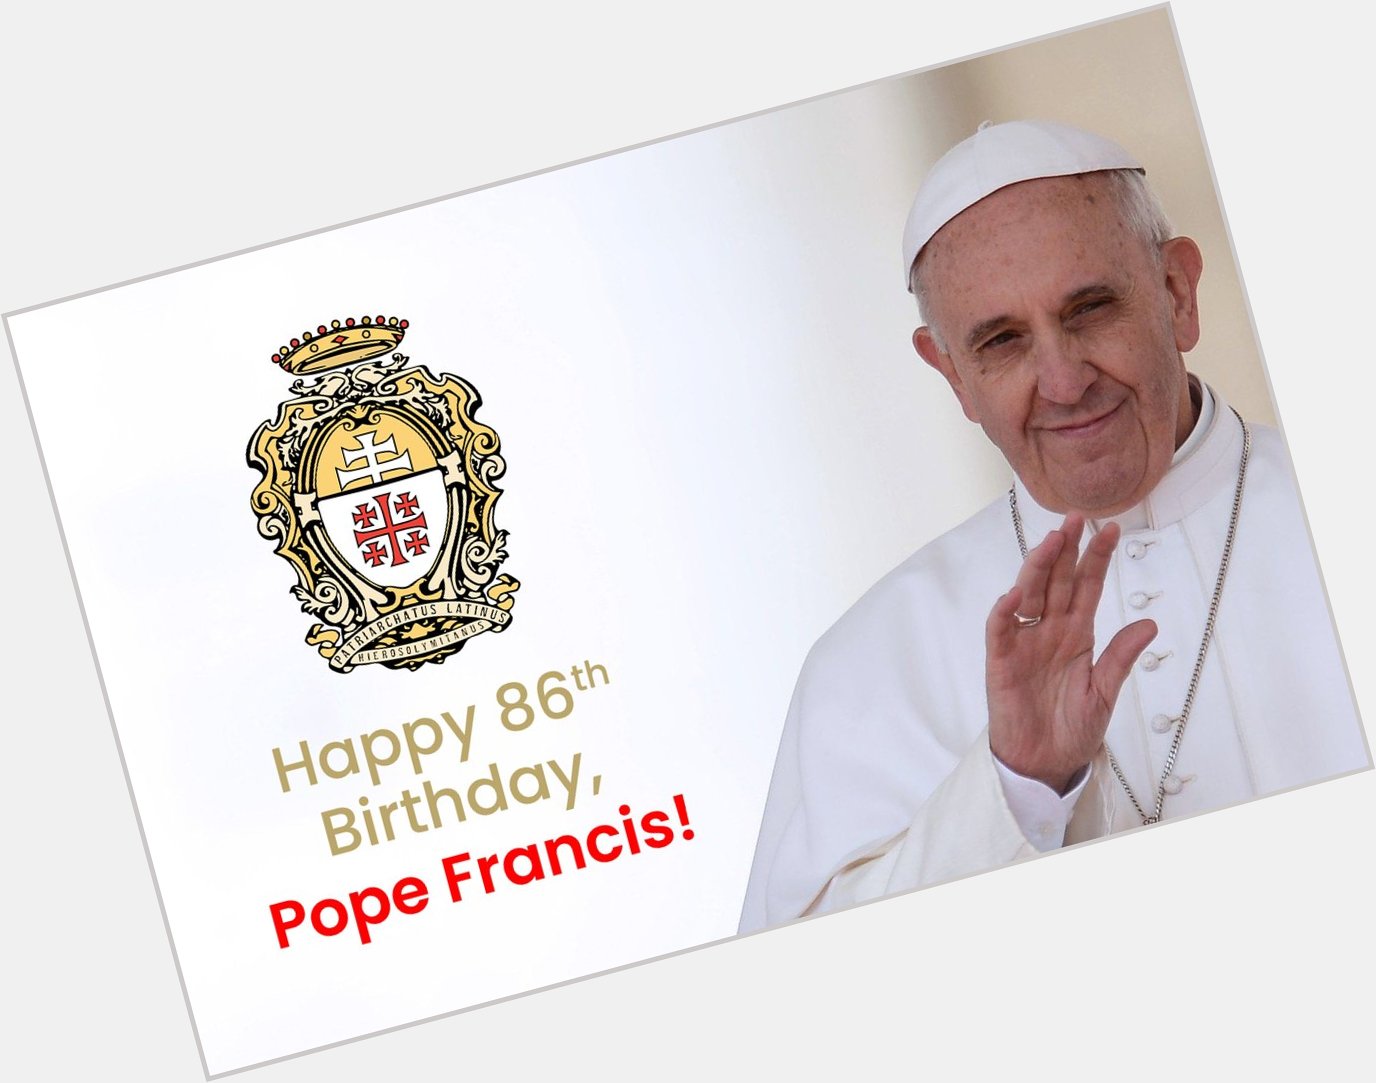                         !
Happy 86th Birthday, Pope Francis!  